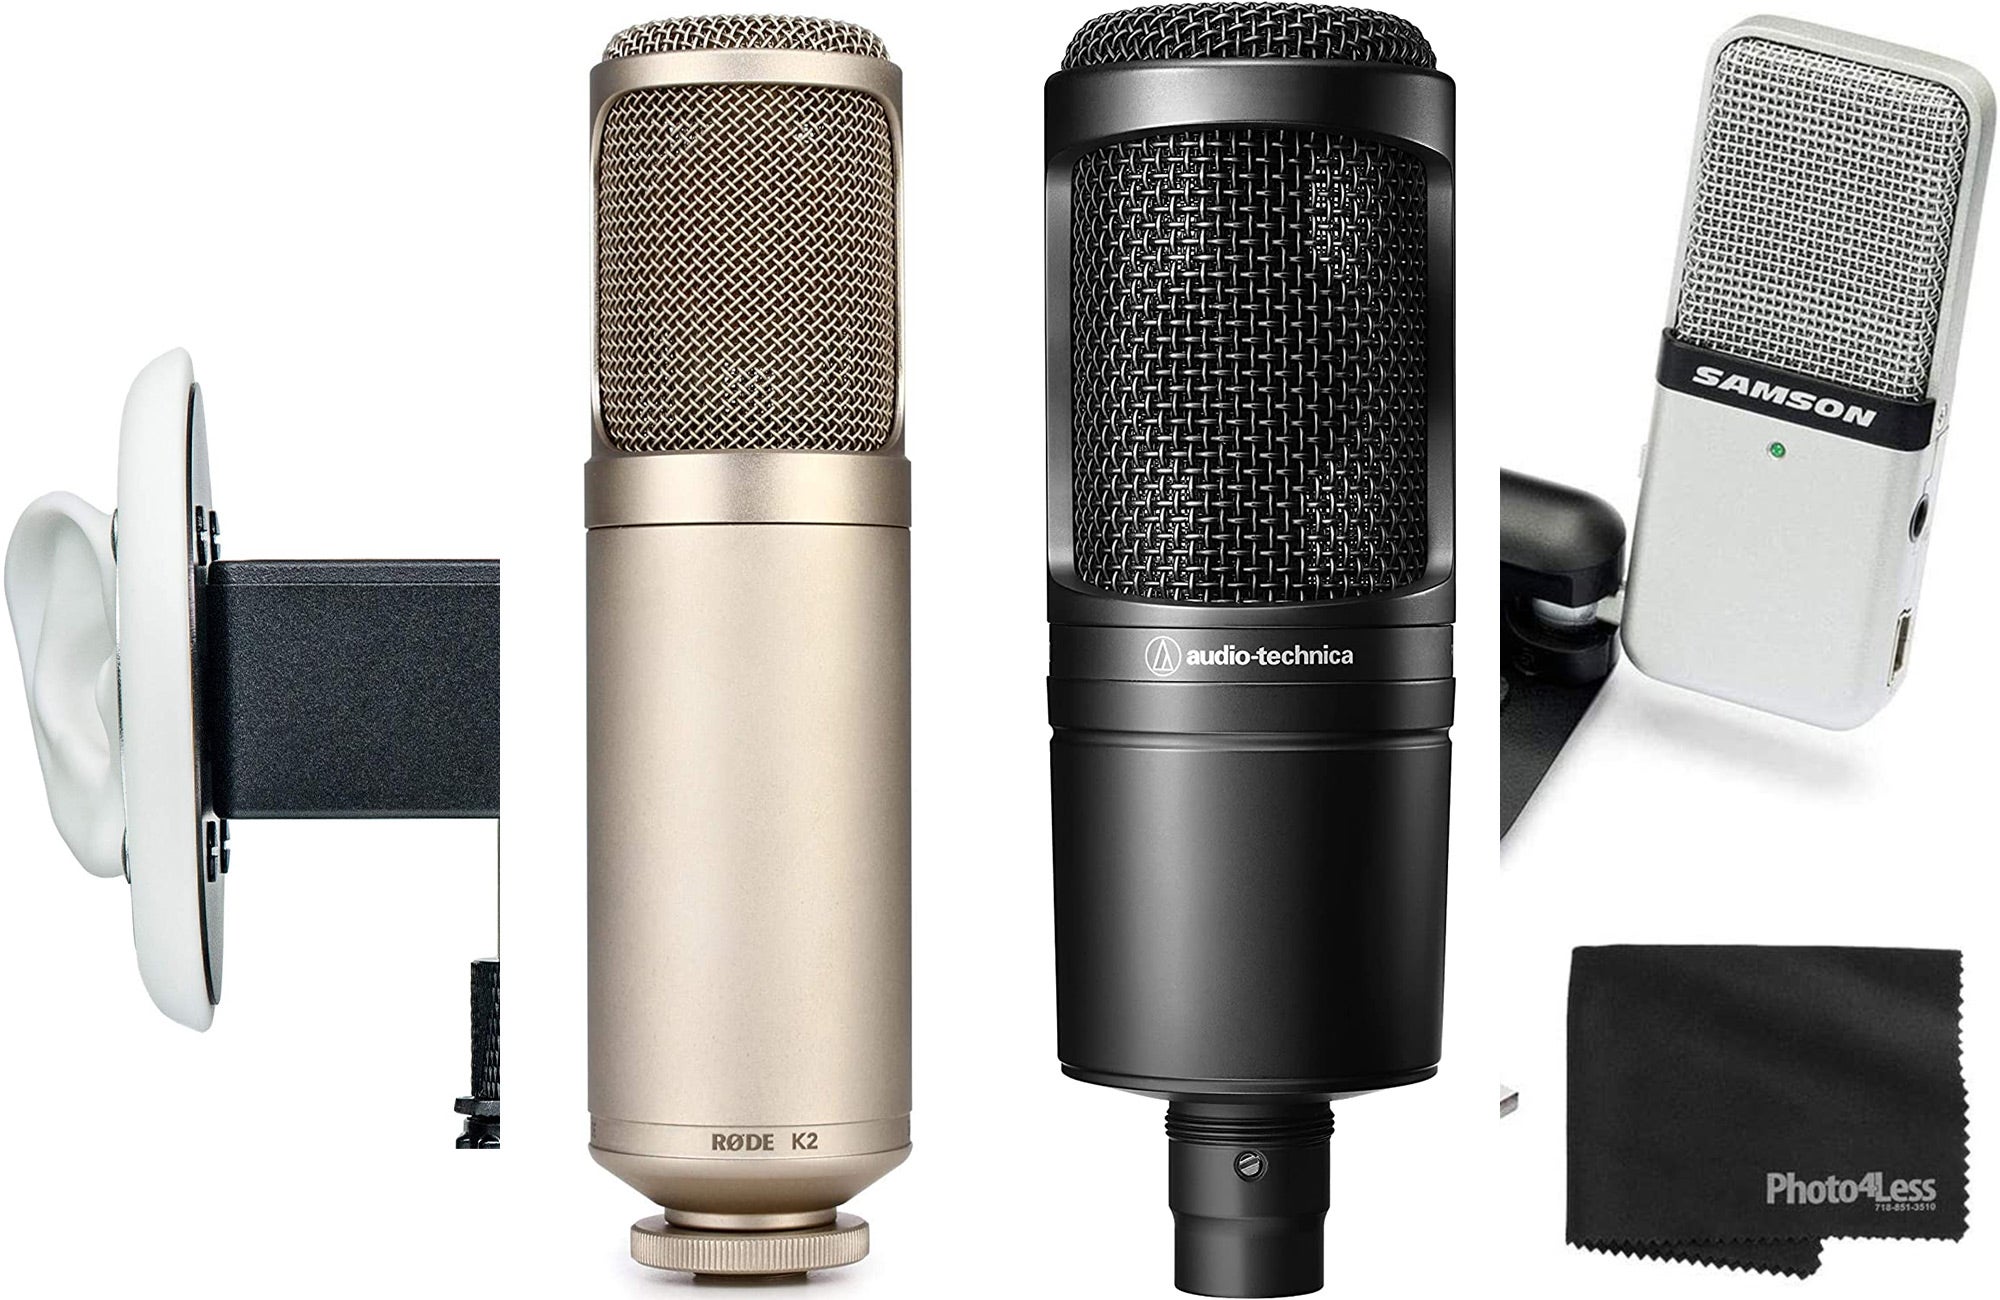 The best ASMR microphones in 2023